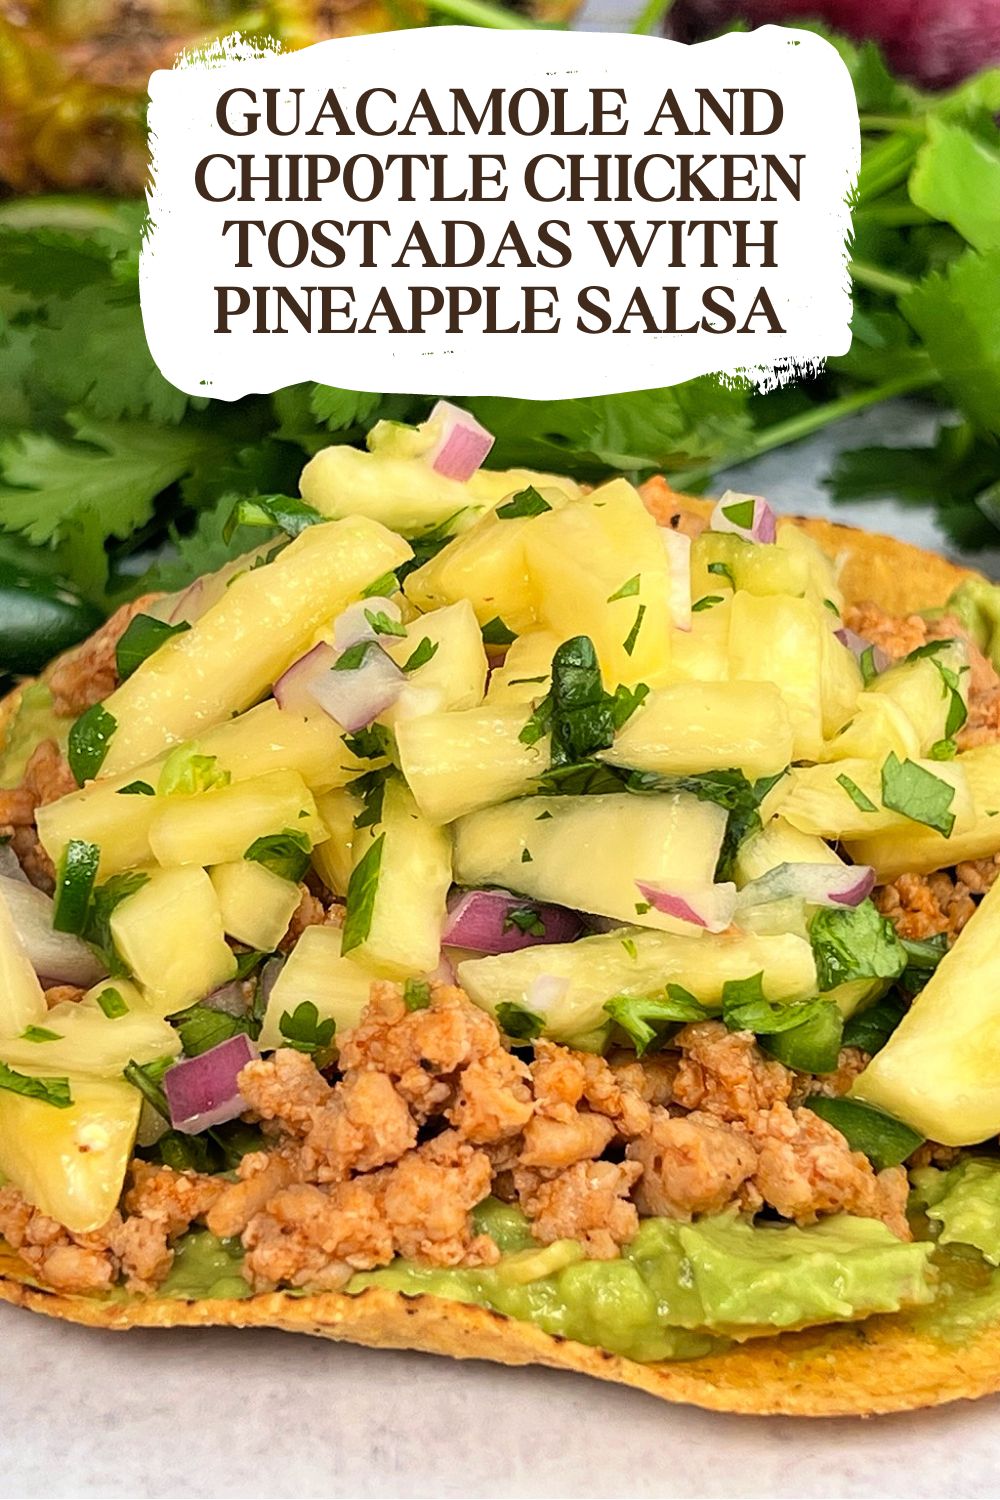 Guacamole and Chipotle Chicken Tostadas with Pineapple Salsa via @preventionrd